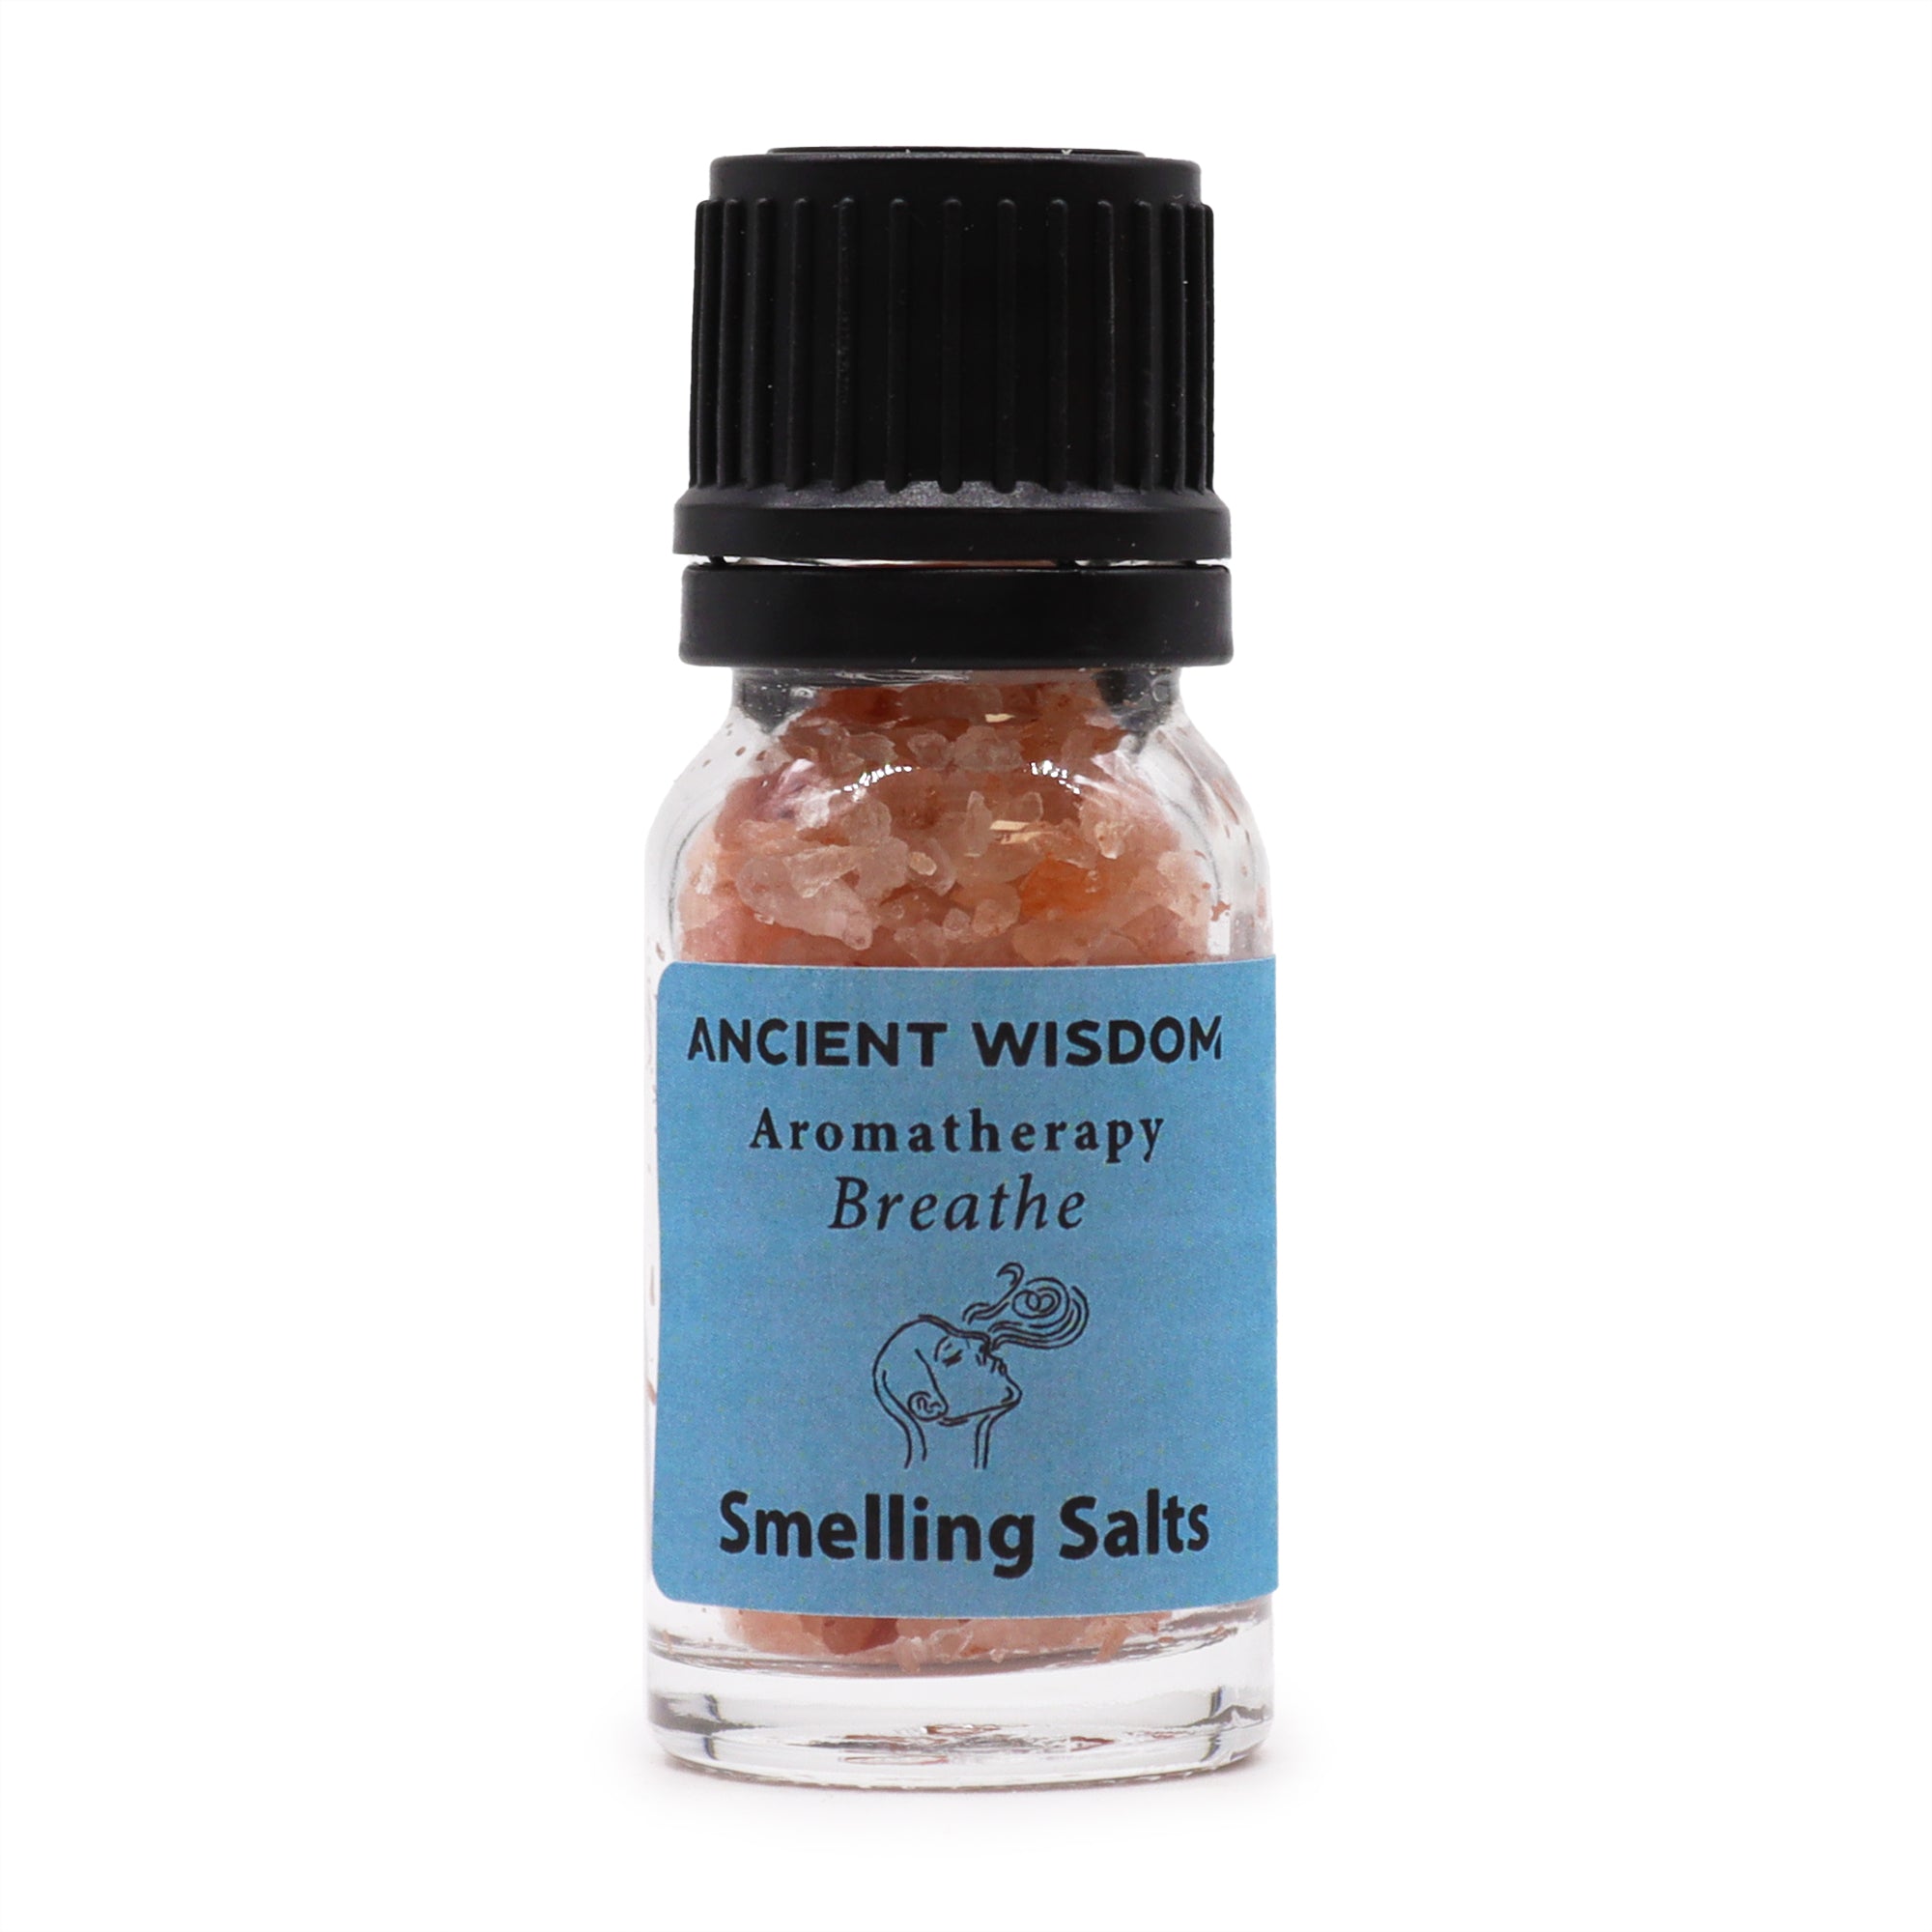 View Breathe Aromatherapy Smelling Salt information